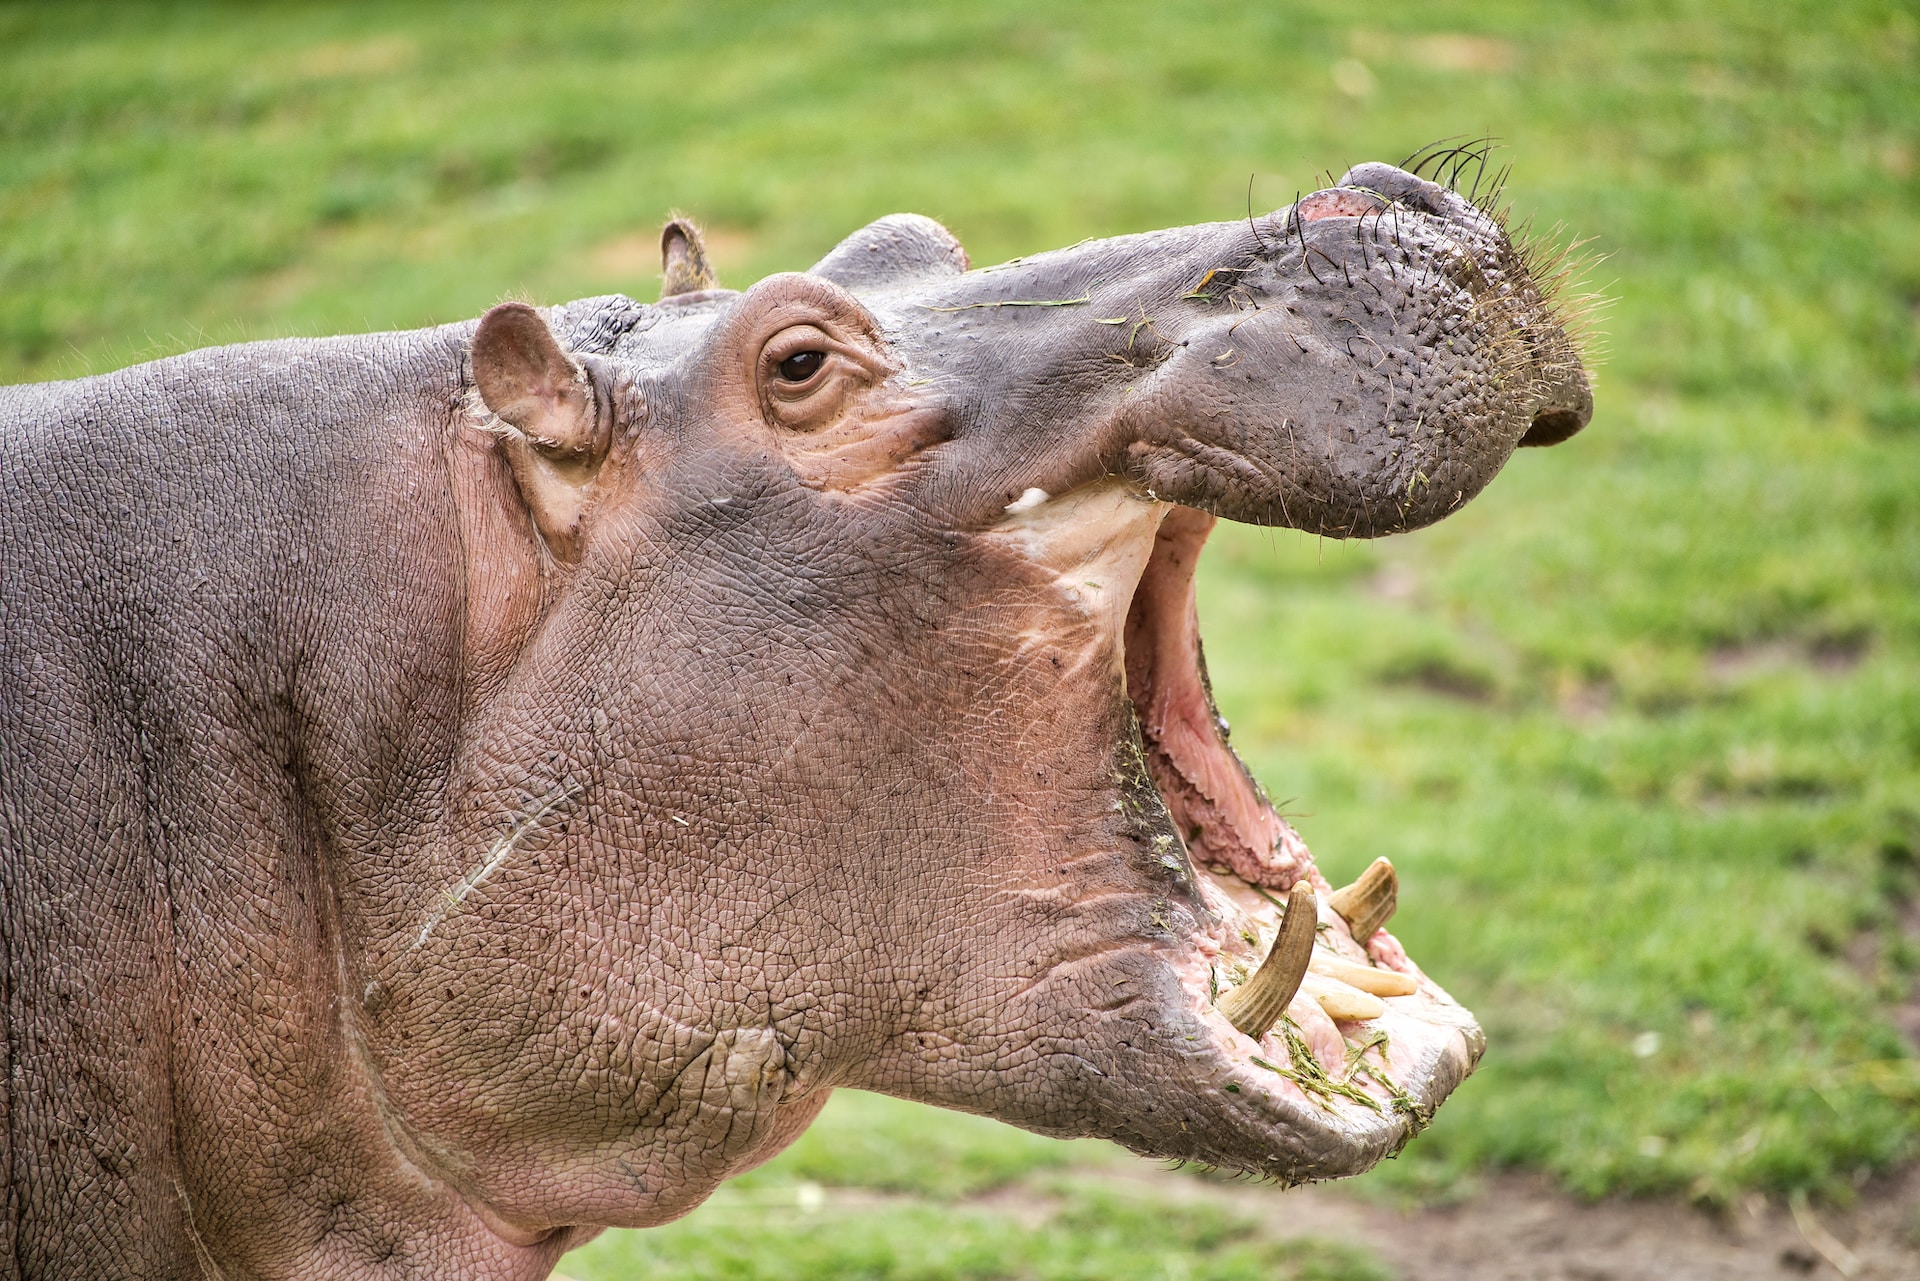 दरियाई घोड़े के बारे में रोचक तथ्य | Top 10 Interesting Facts About Hippopotamuses (Hippo) You Should Know